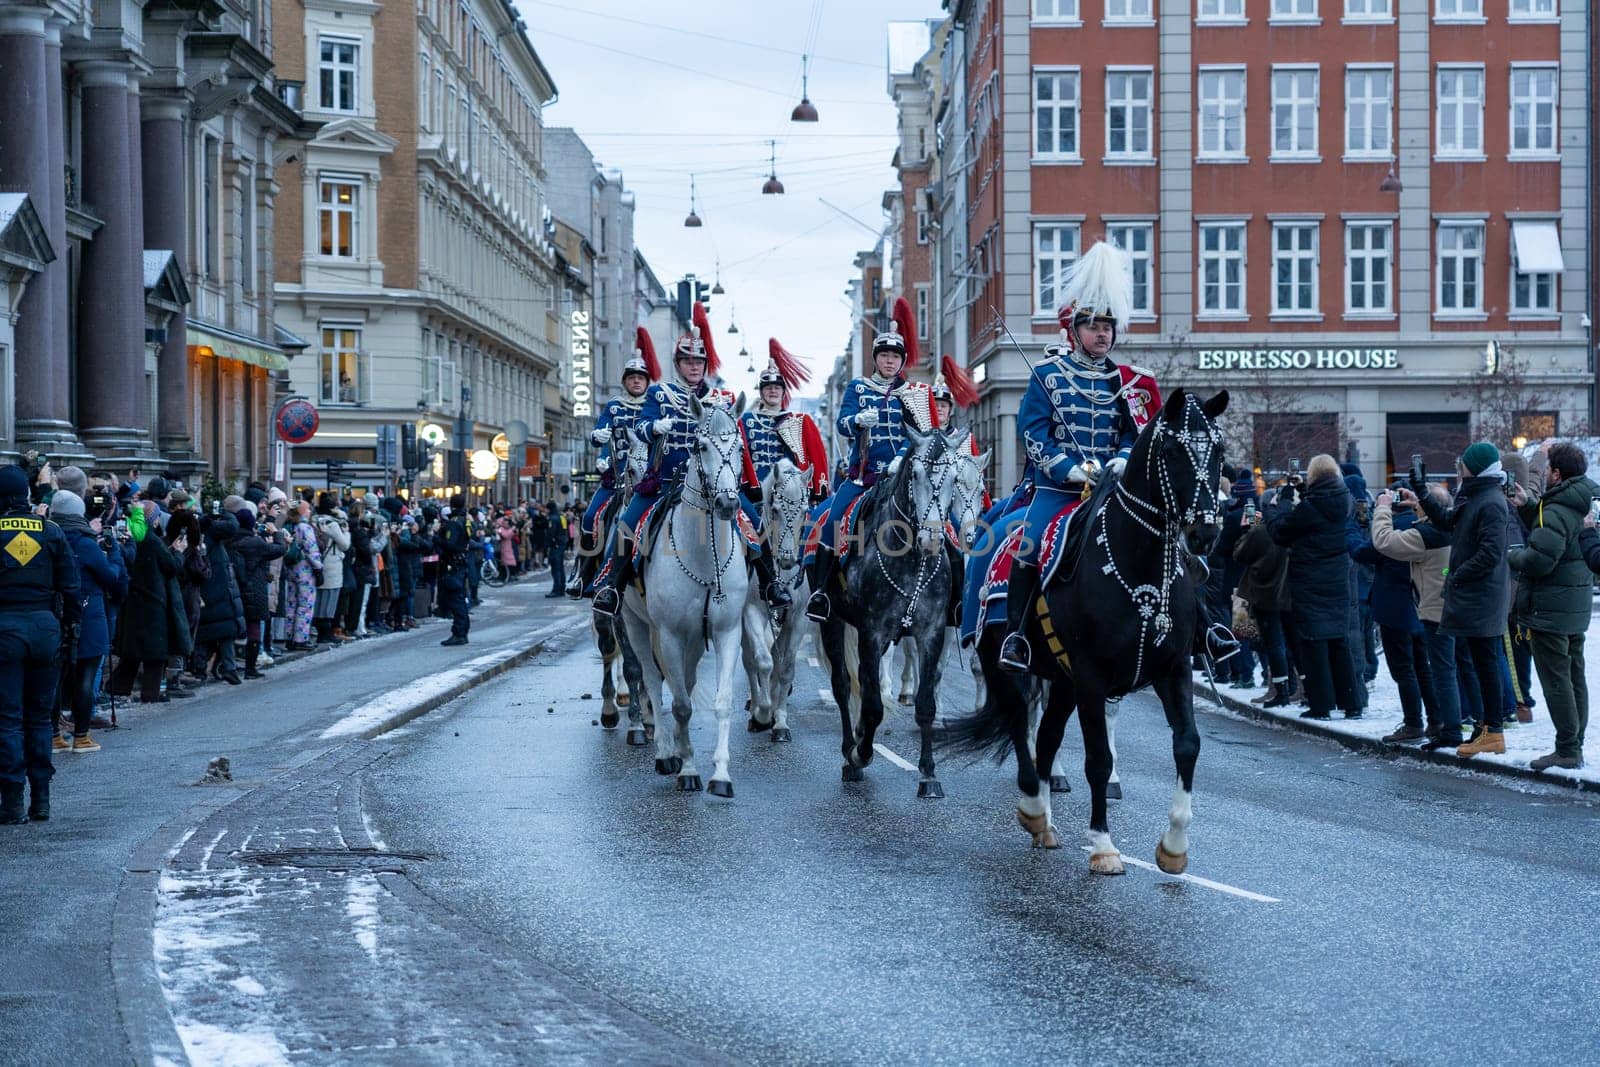 Queen Margrethe II Ride in Golden Carriage by oliverfoerstner